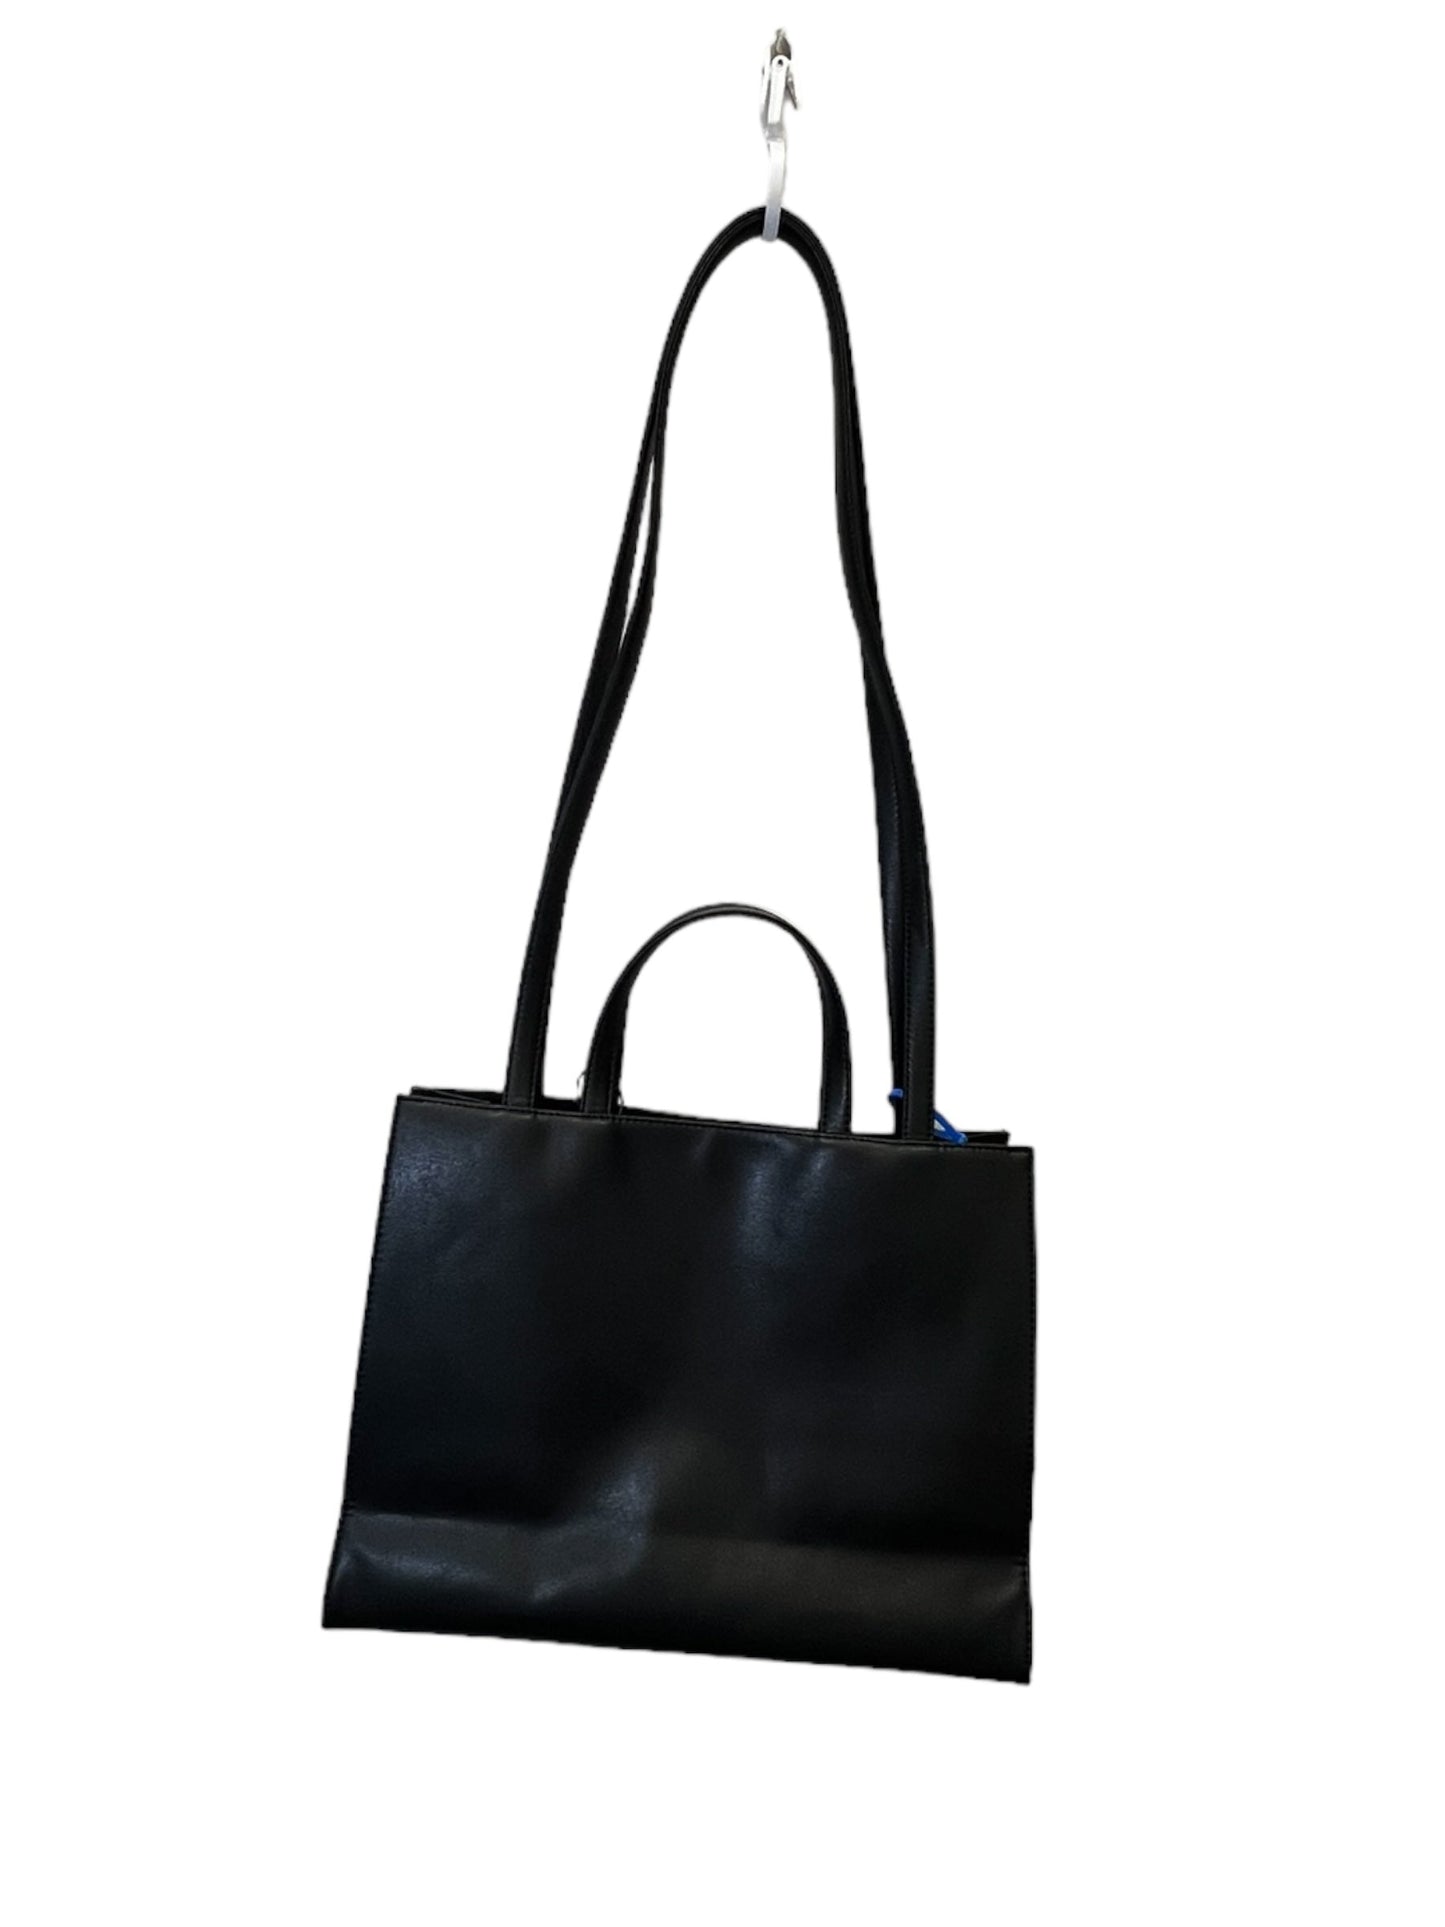 Handbag Designer Telfar, Size Medium